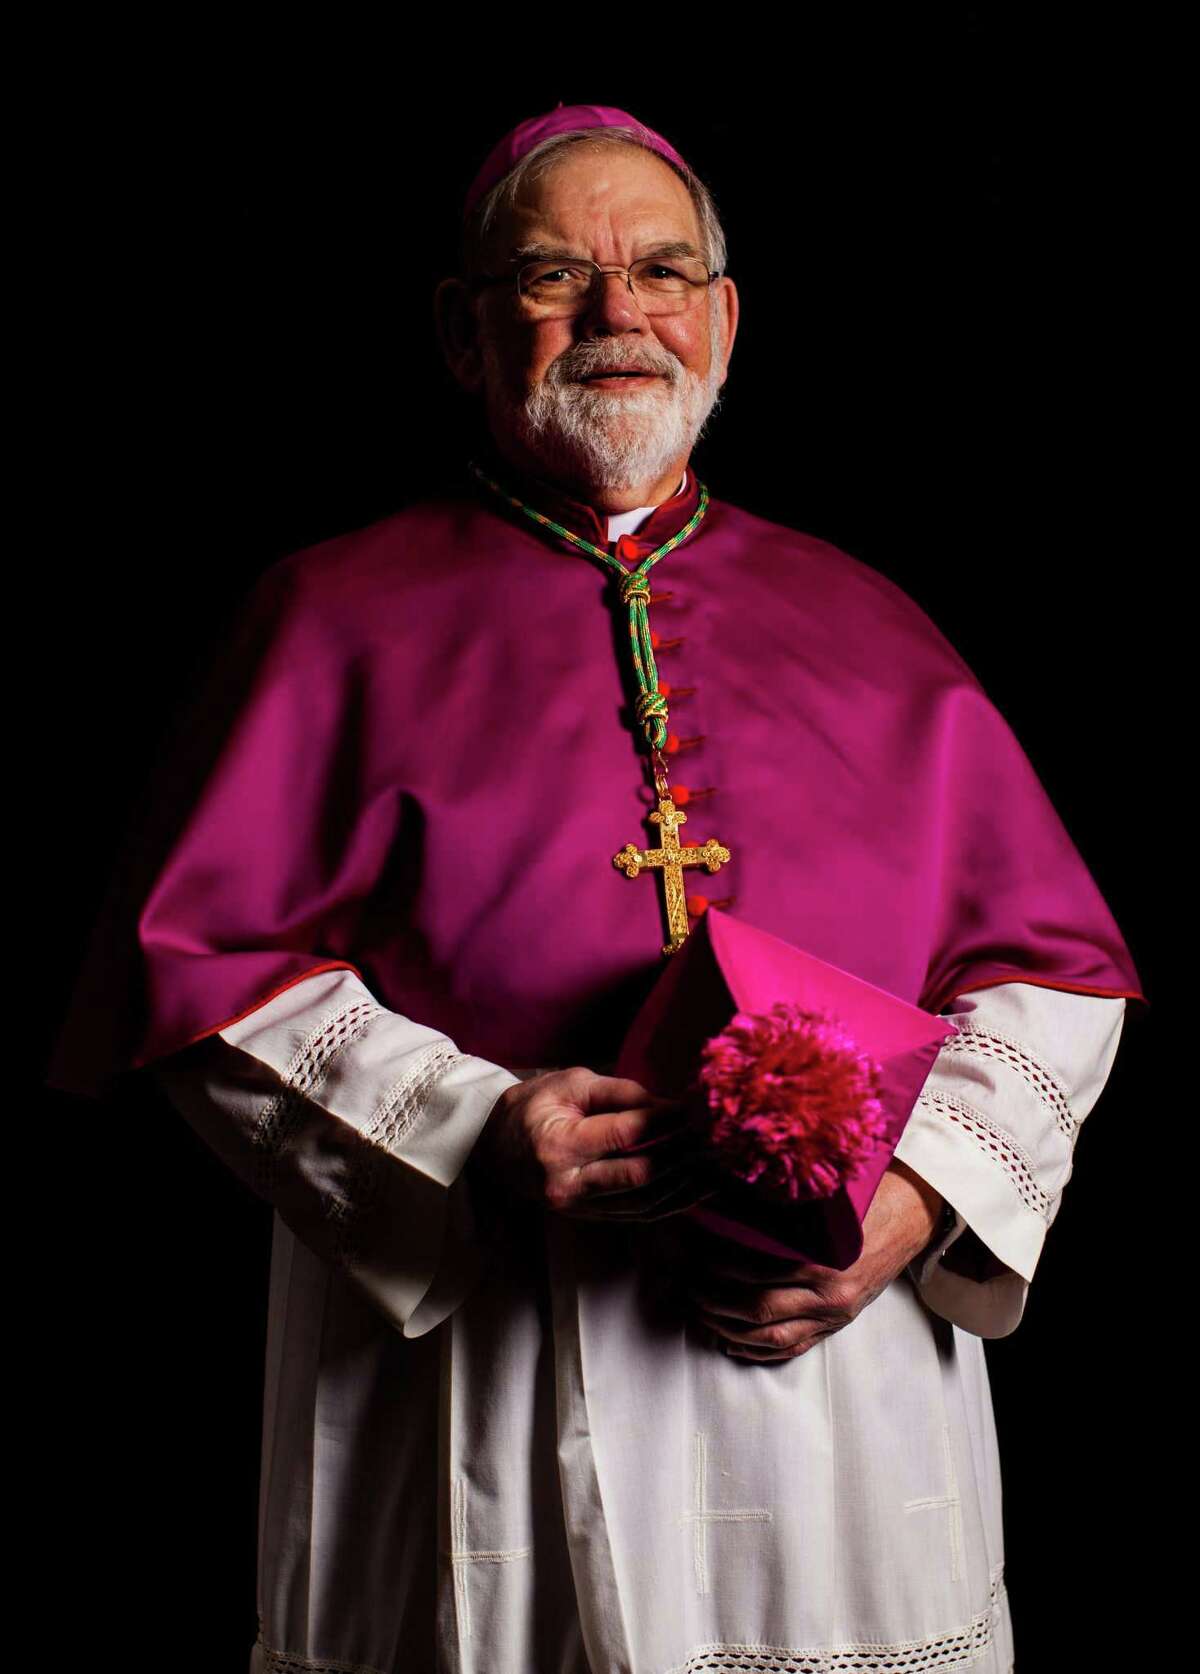 Retired Auxiliary Bishop George Sheltz